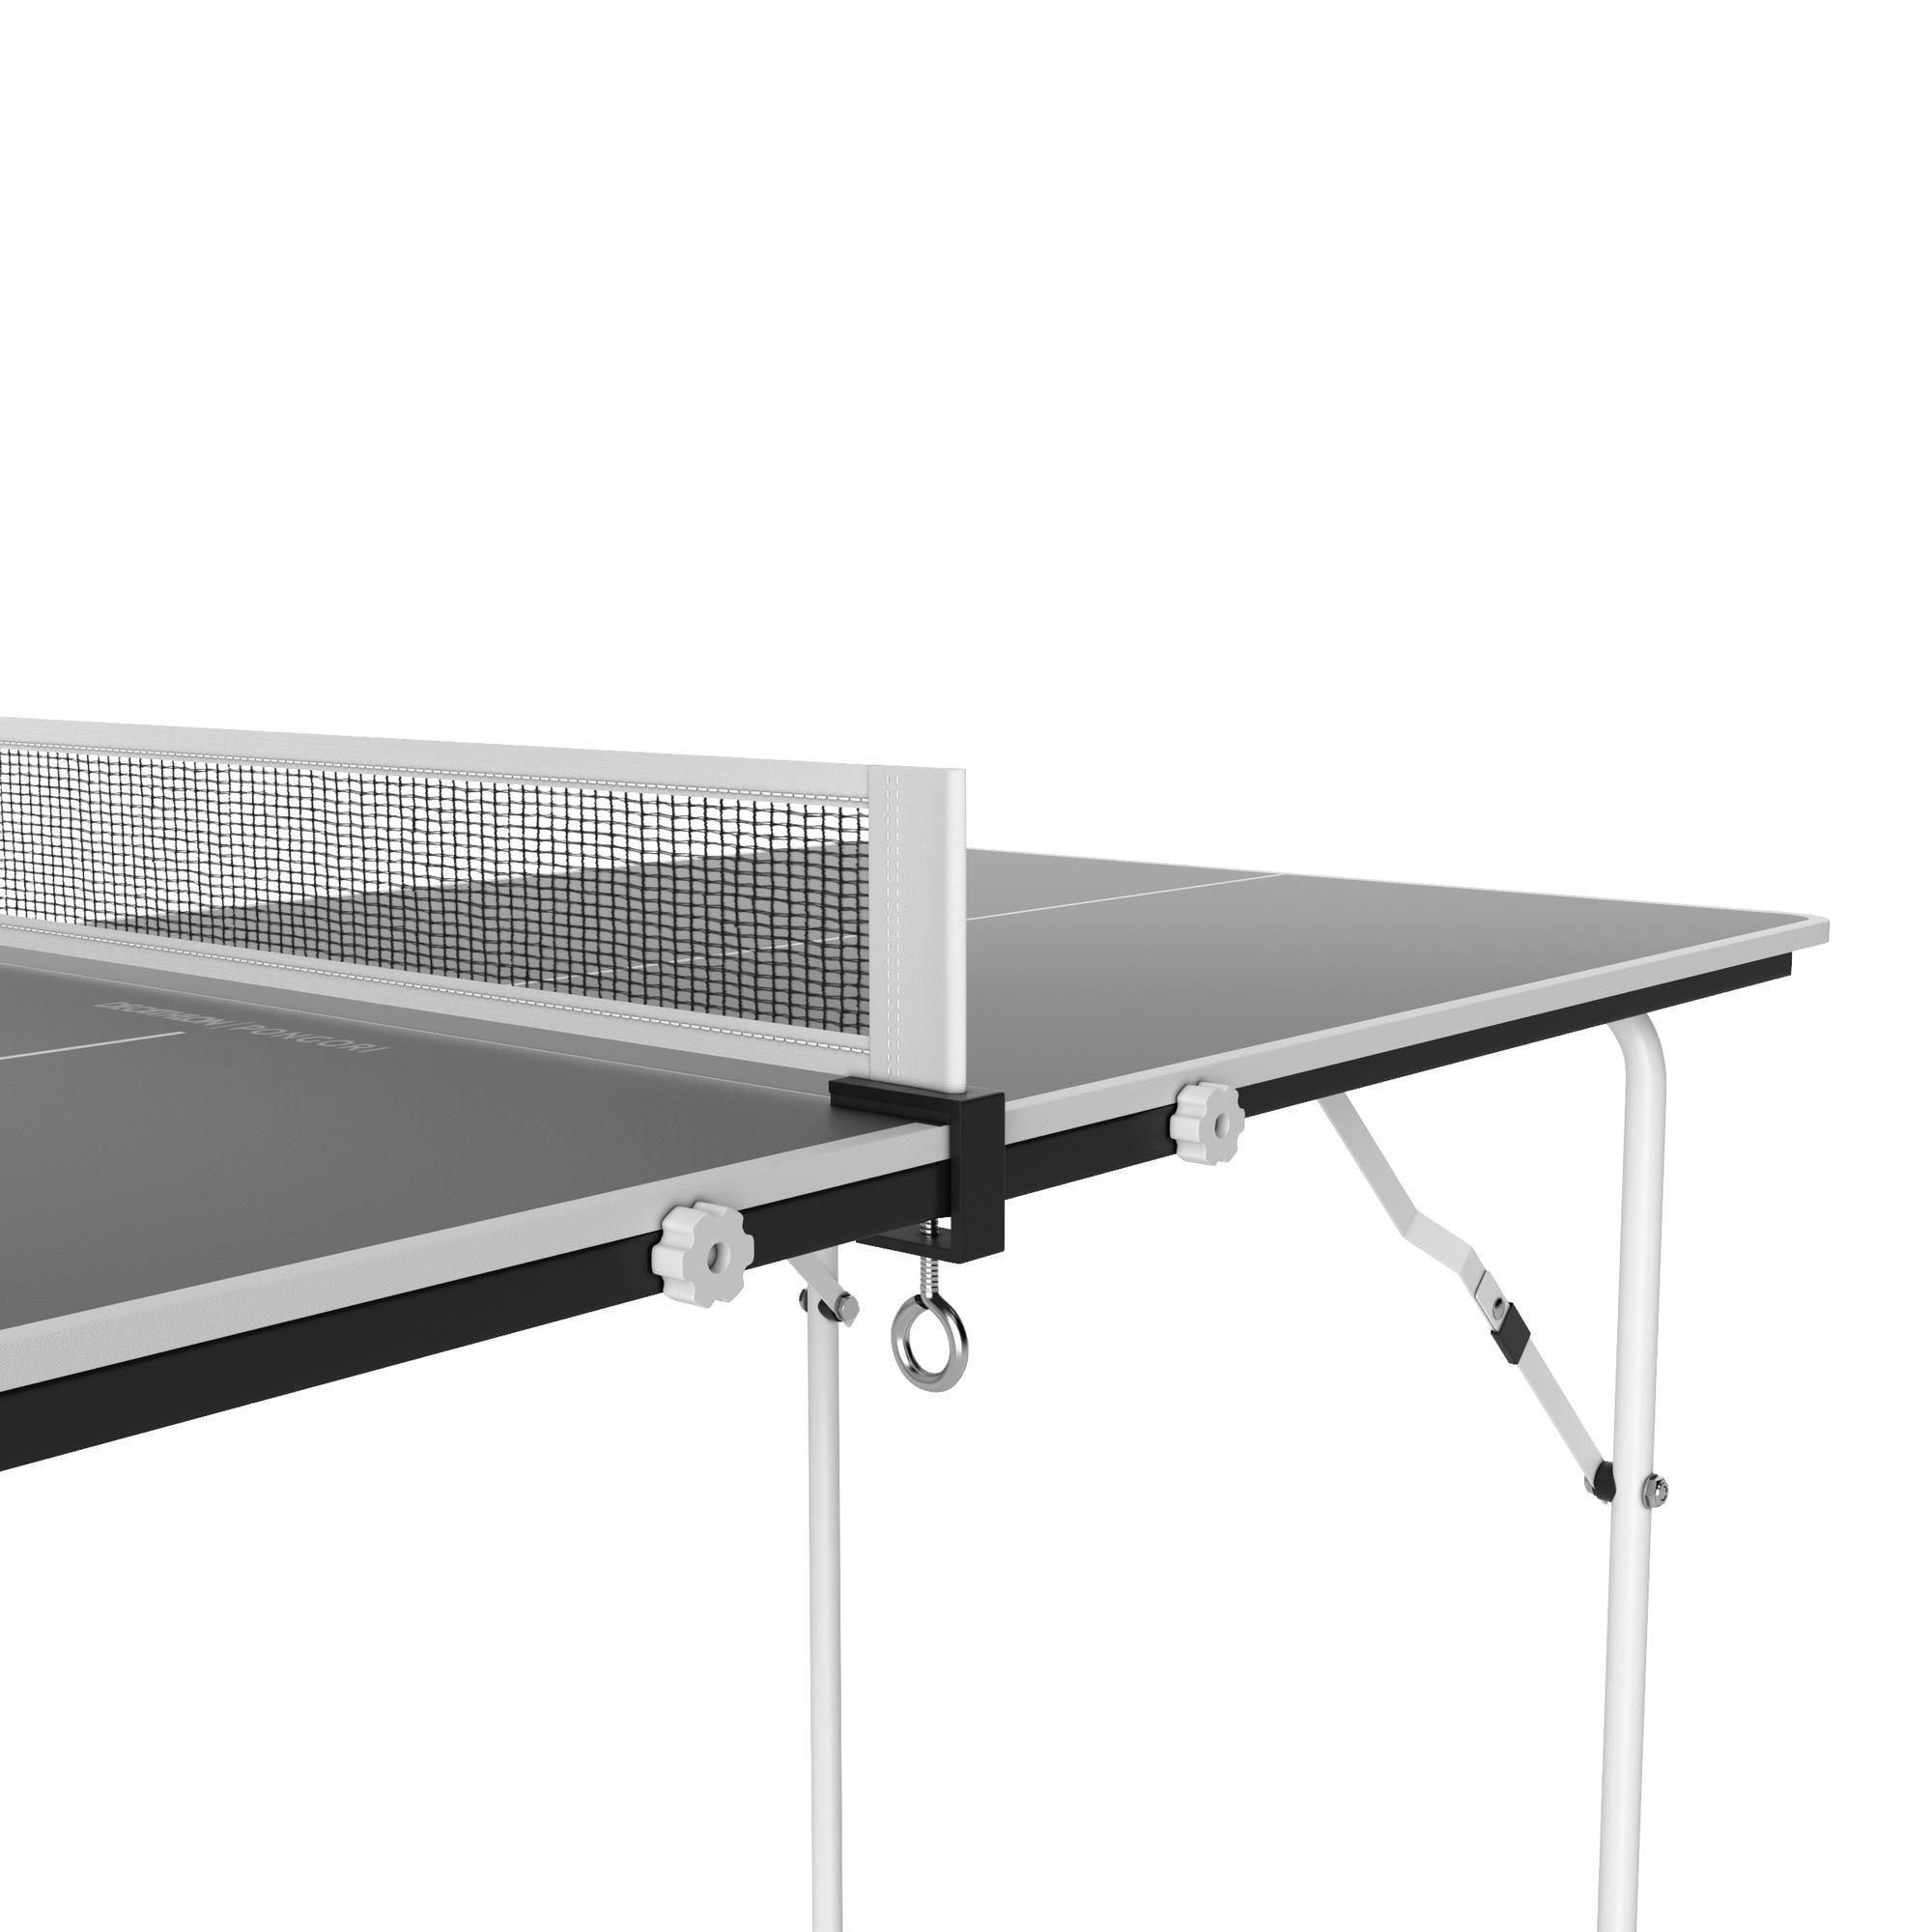 mini table tennis decathlon